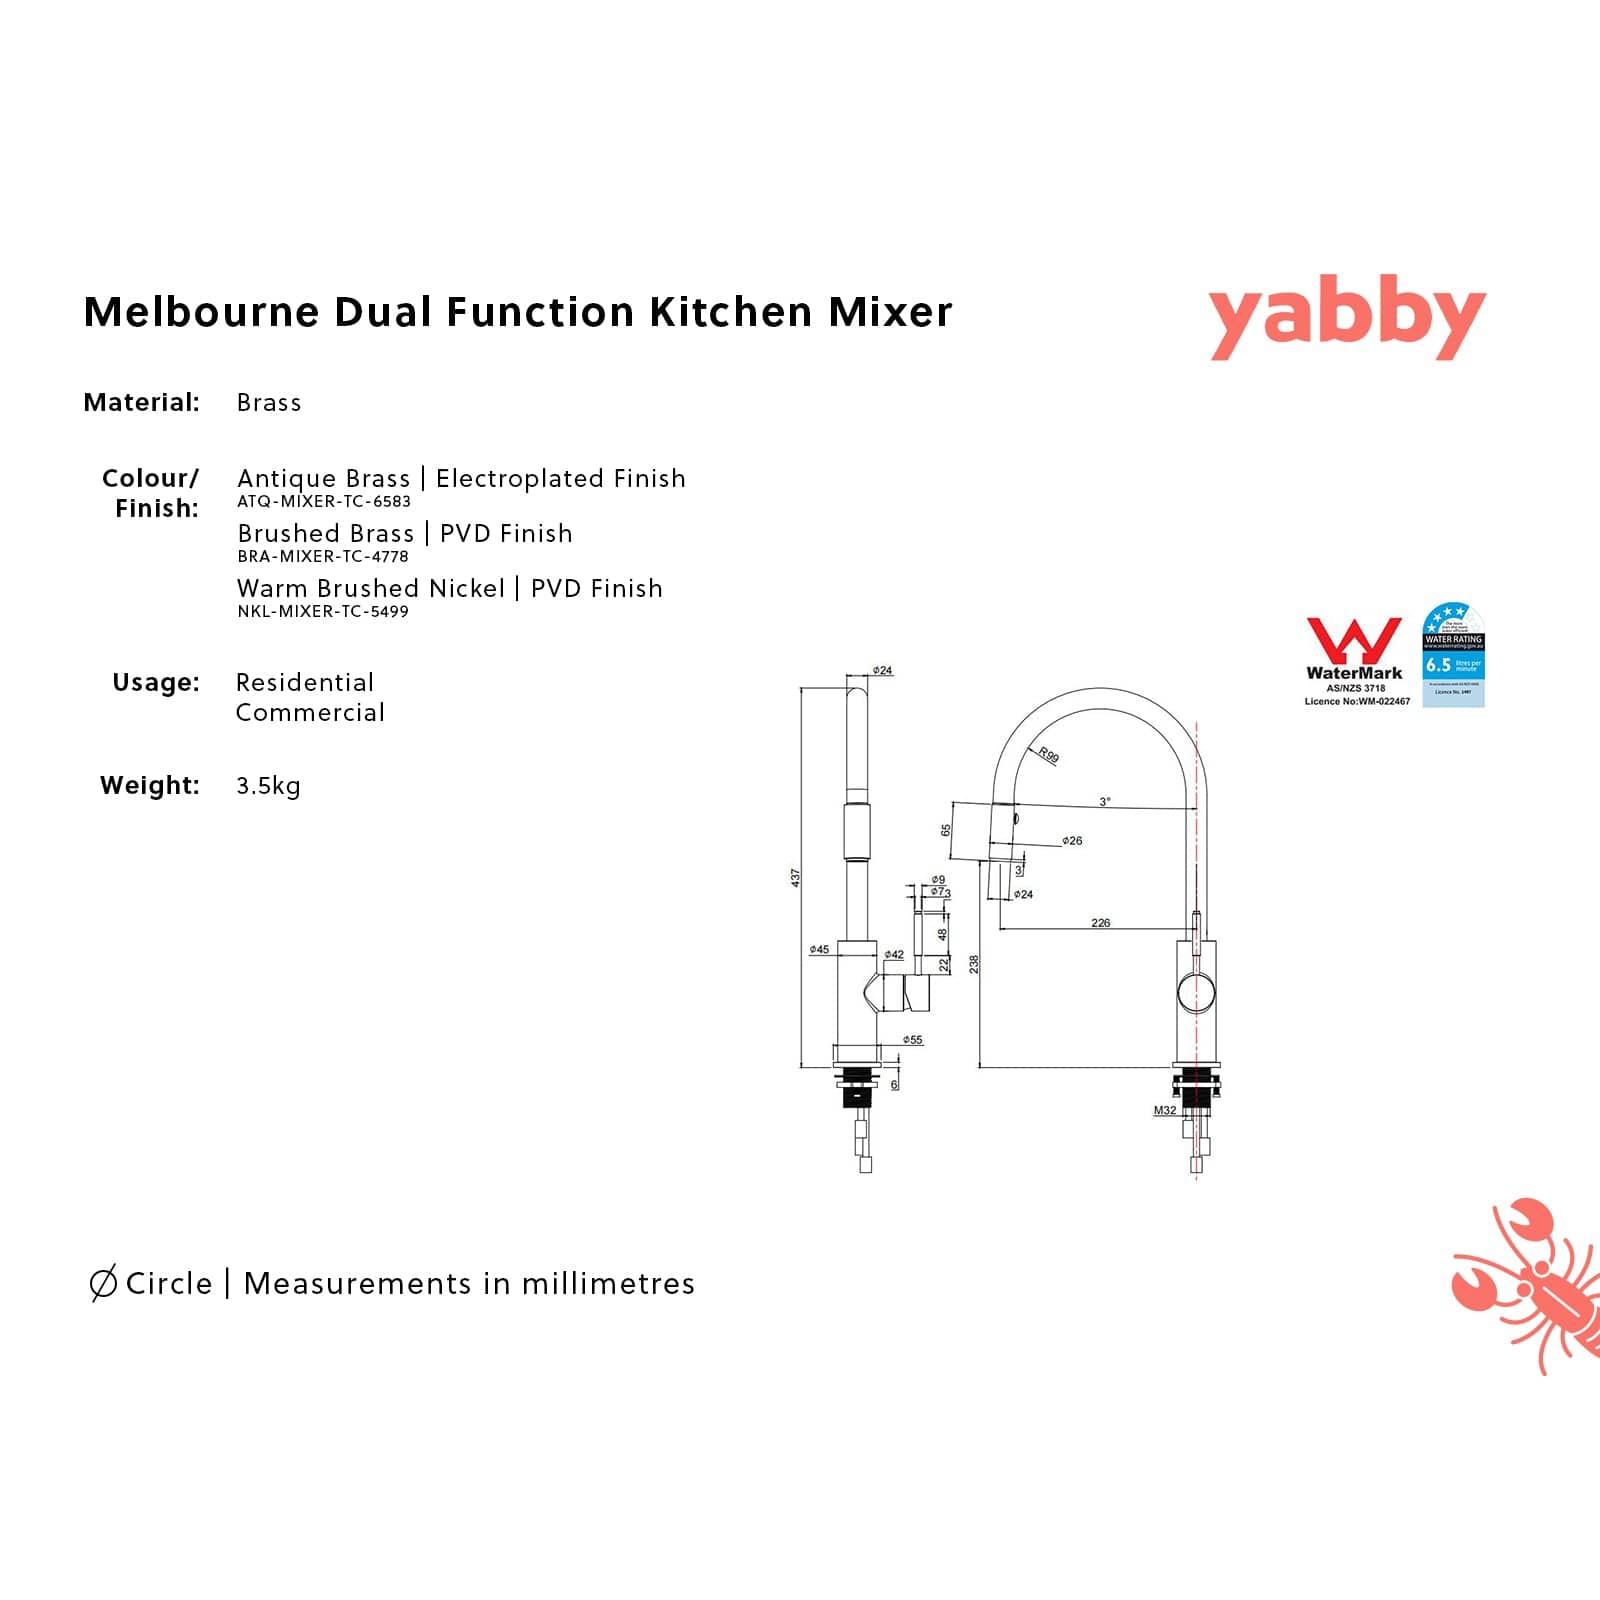 TileCloud TAPWARE Melbourne Dual Function Kitchen Mixer Warm Brushed Nickel